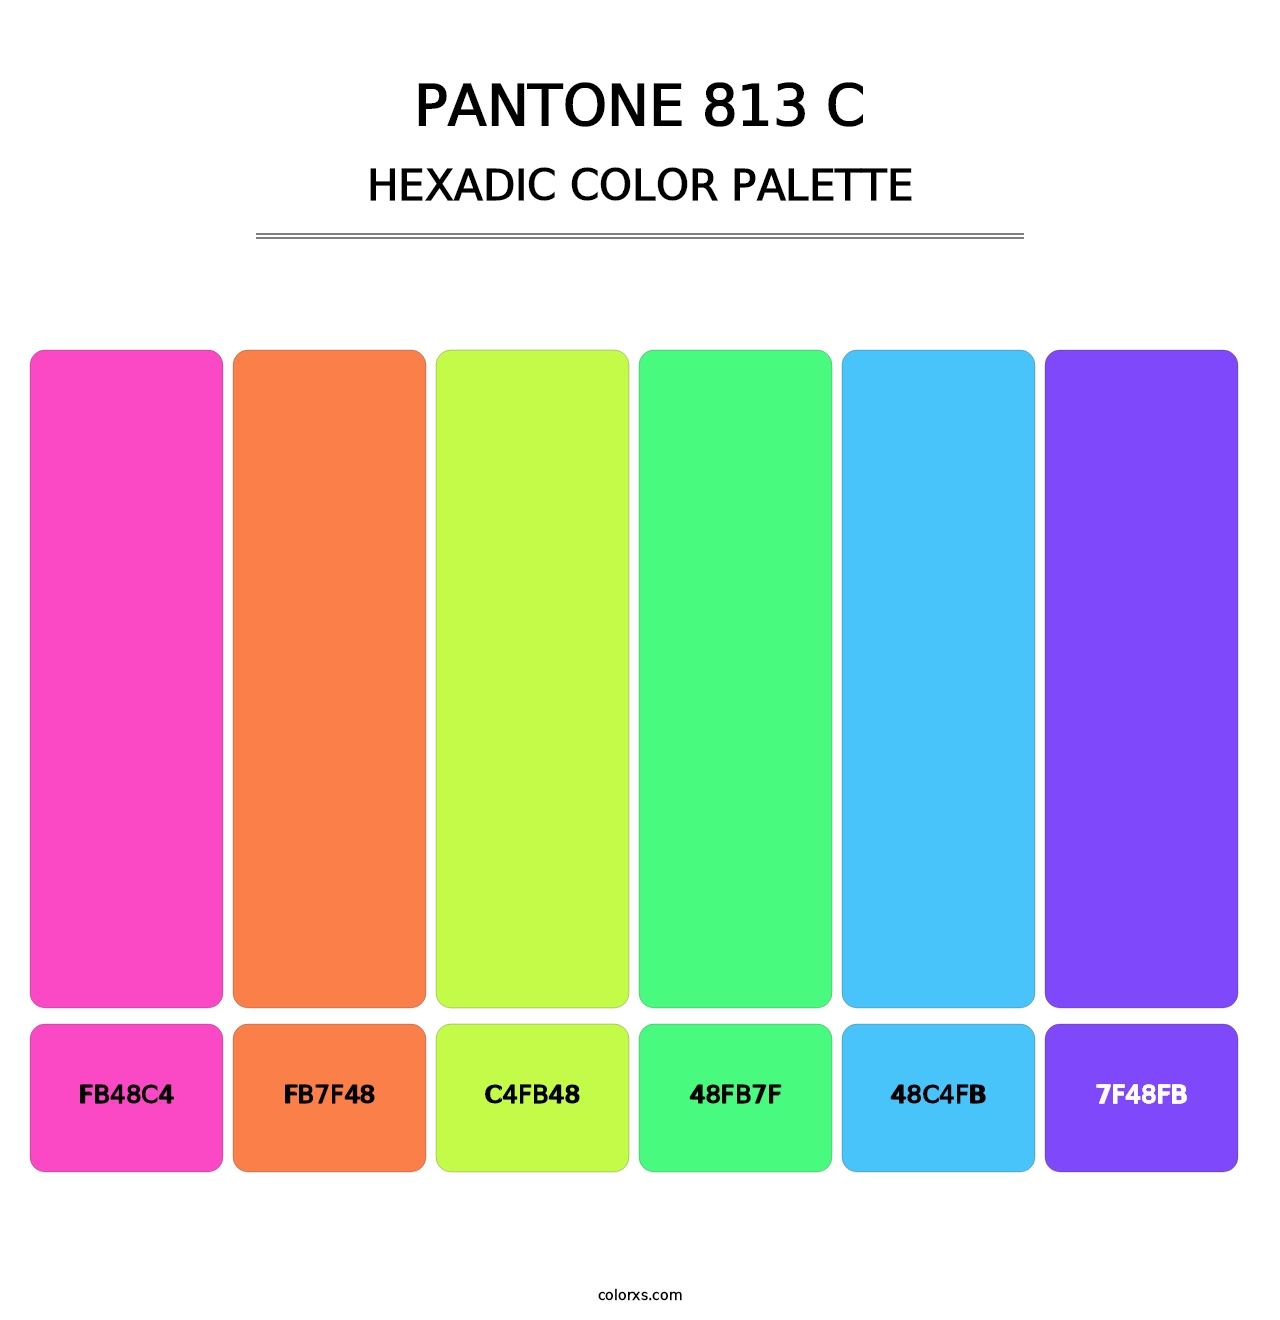 PANTONE 813 C - Hexadic Color Palette